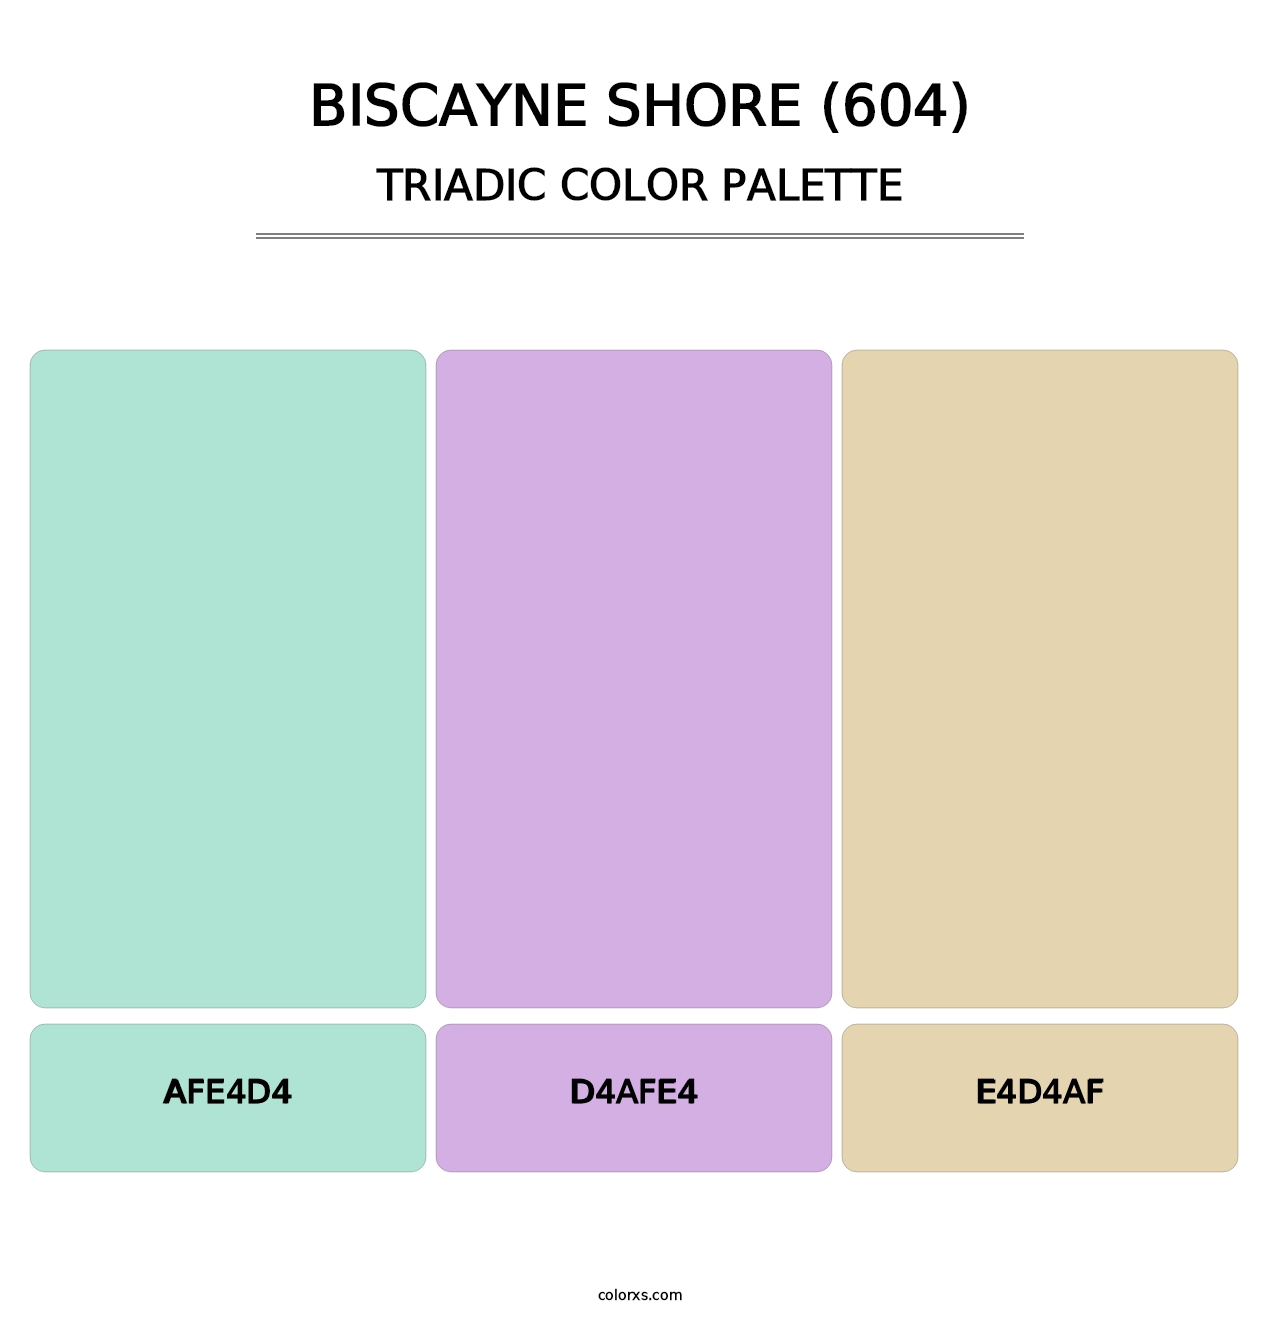 Biscayne Shore (604) - Triadic Color Palette